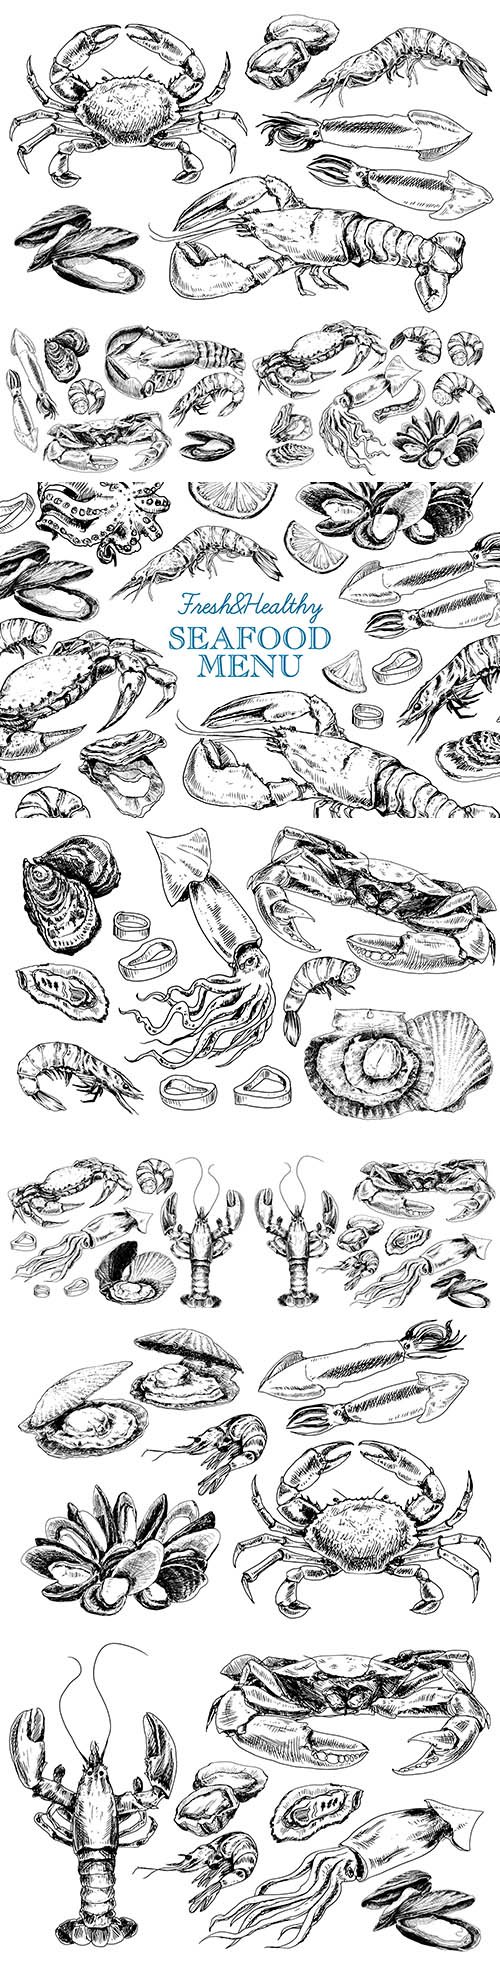 Vintage seafood menu in illustration sketch style